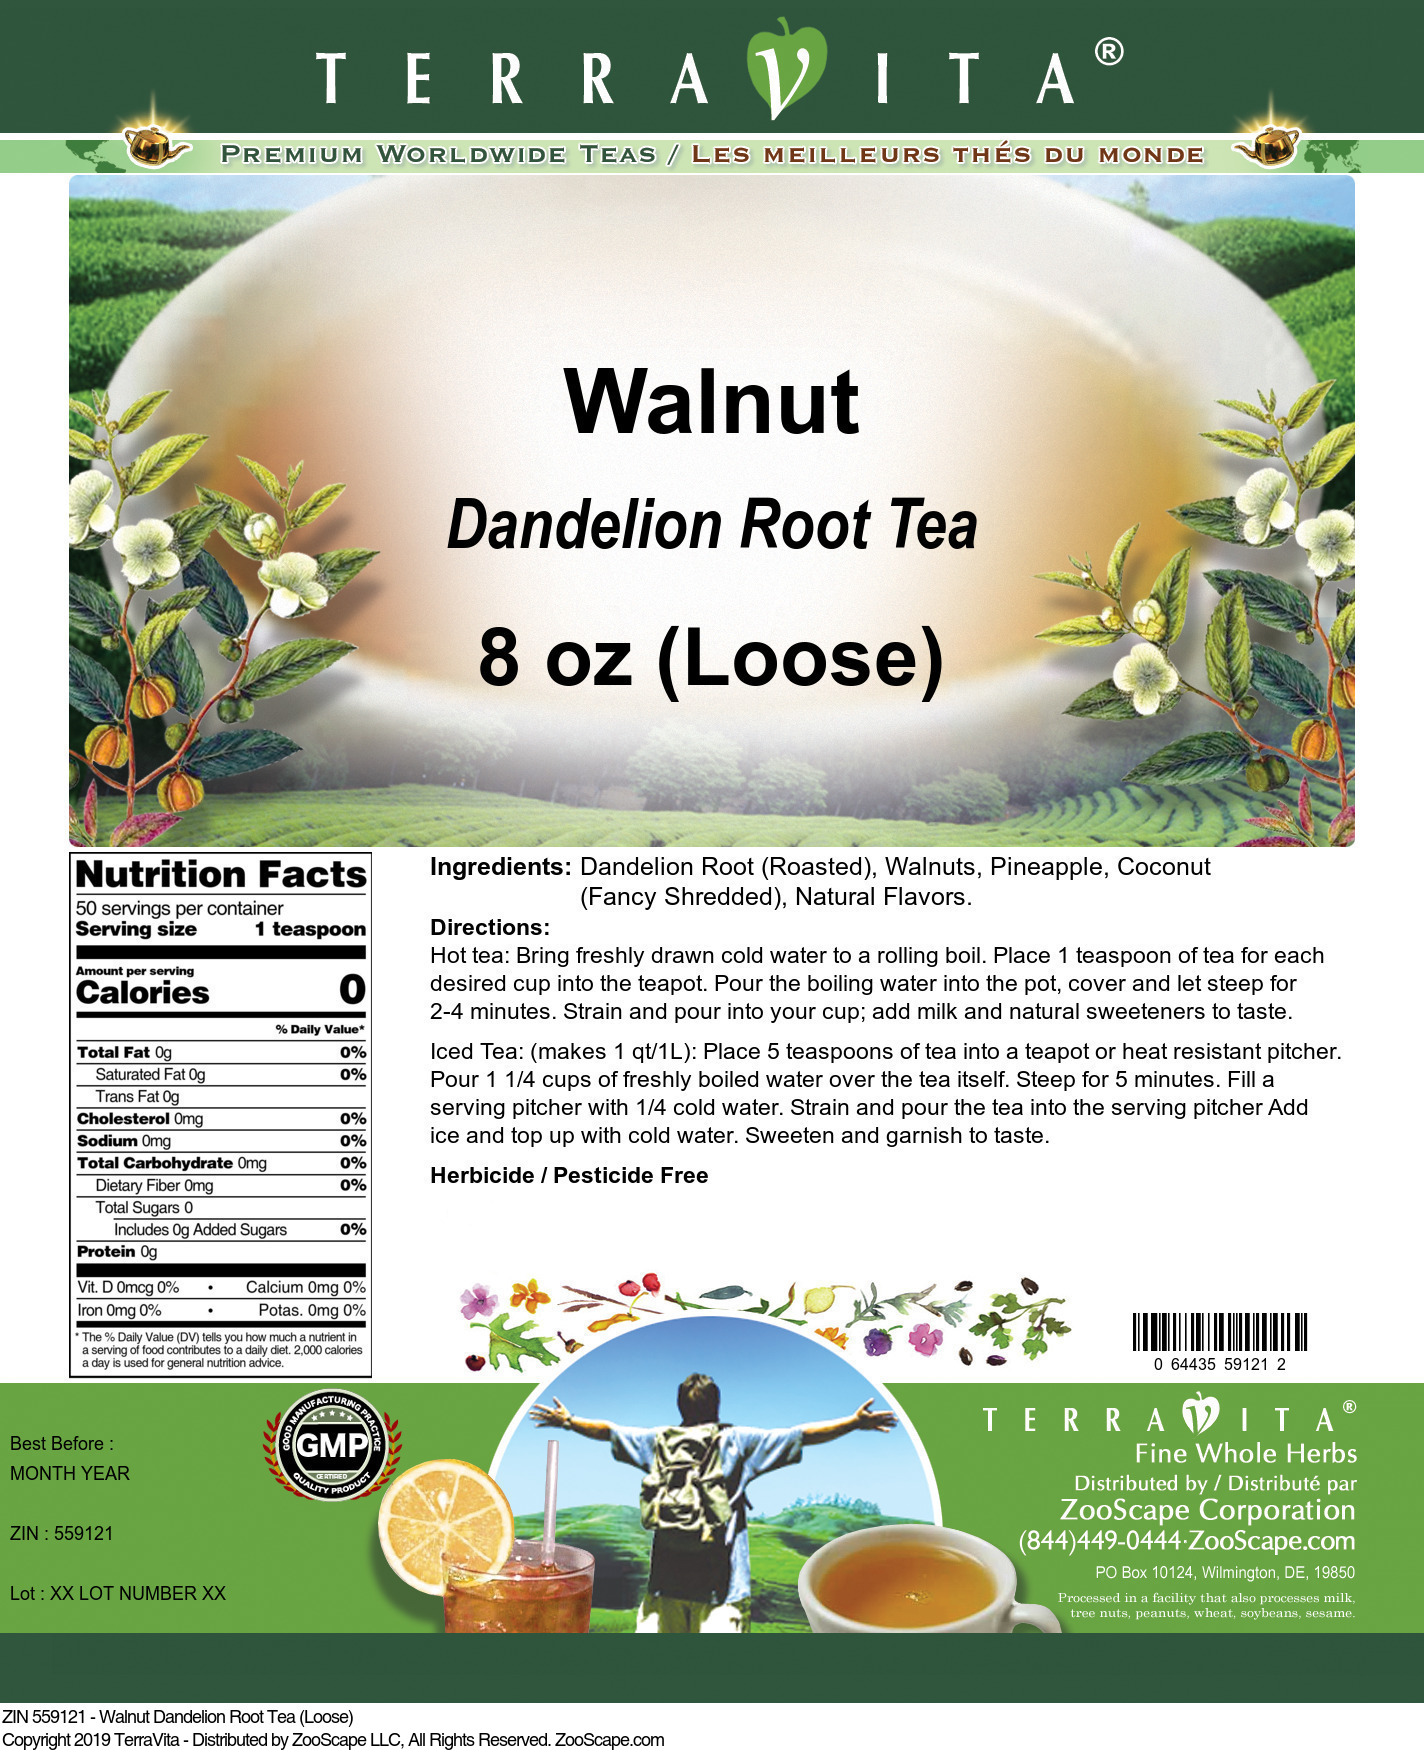 Walnut Dandelion Root Tea (Loose) - Label